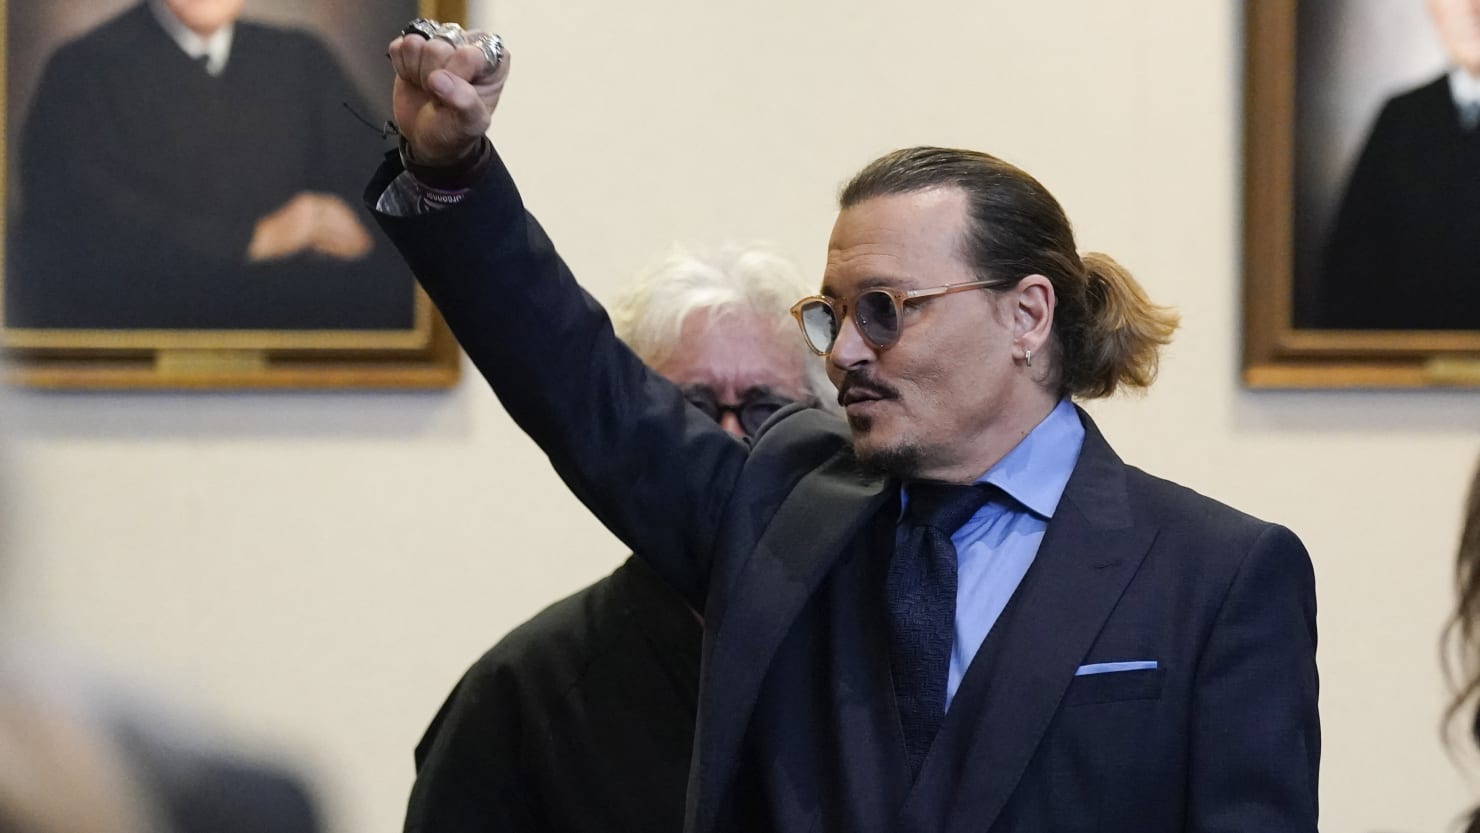 Amber Heard Defamed Johnny Depp in Washington Post Op Ed, Jury Says